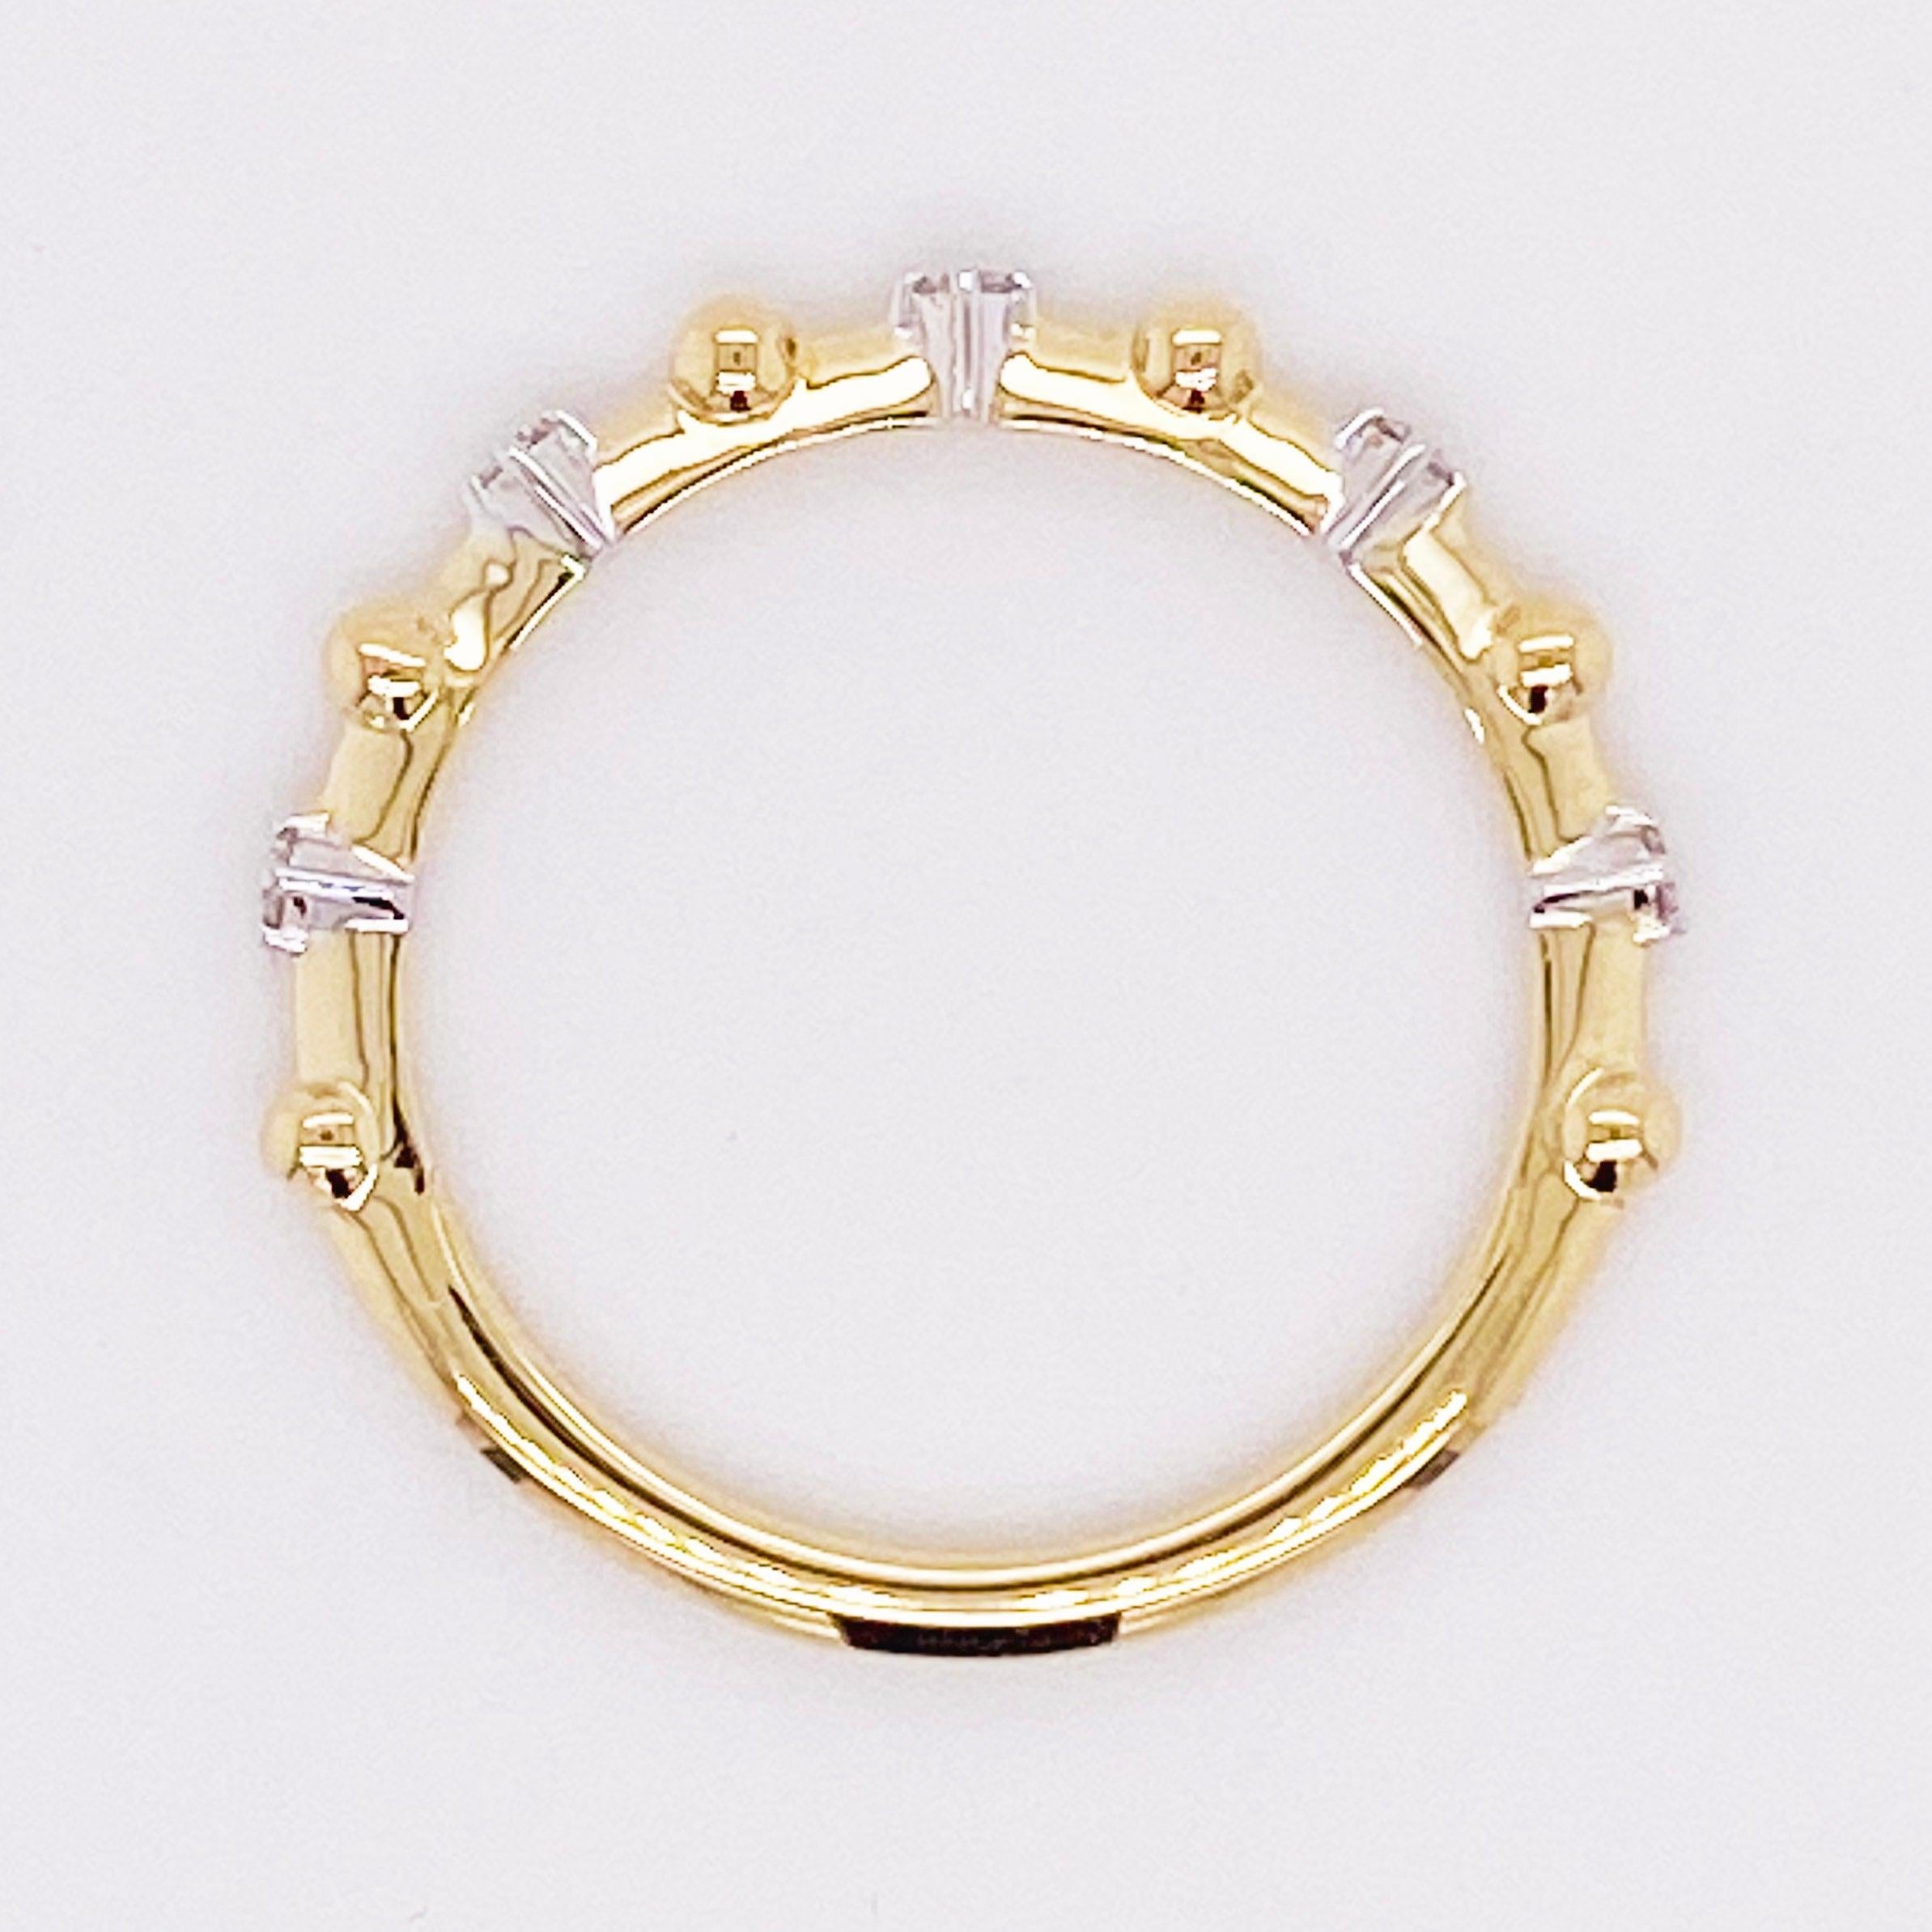 For Sale:  Alternating Diamond Ring, 14 Karat Gold Diamond and Ball Bead Band, LR51703Y45JJ 6